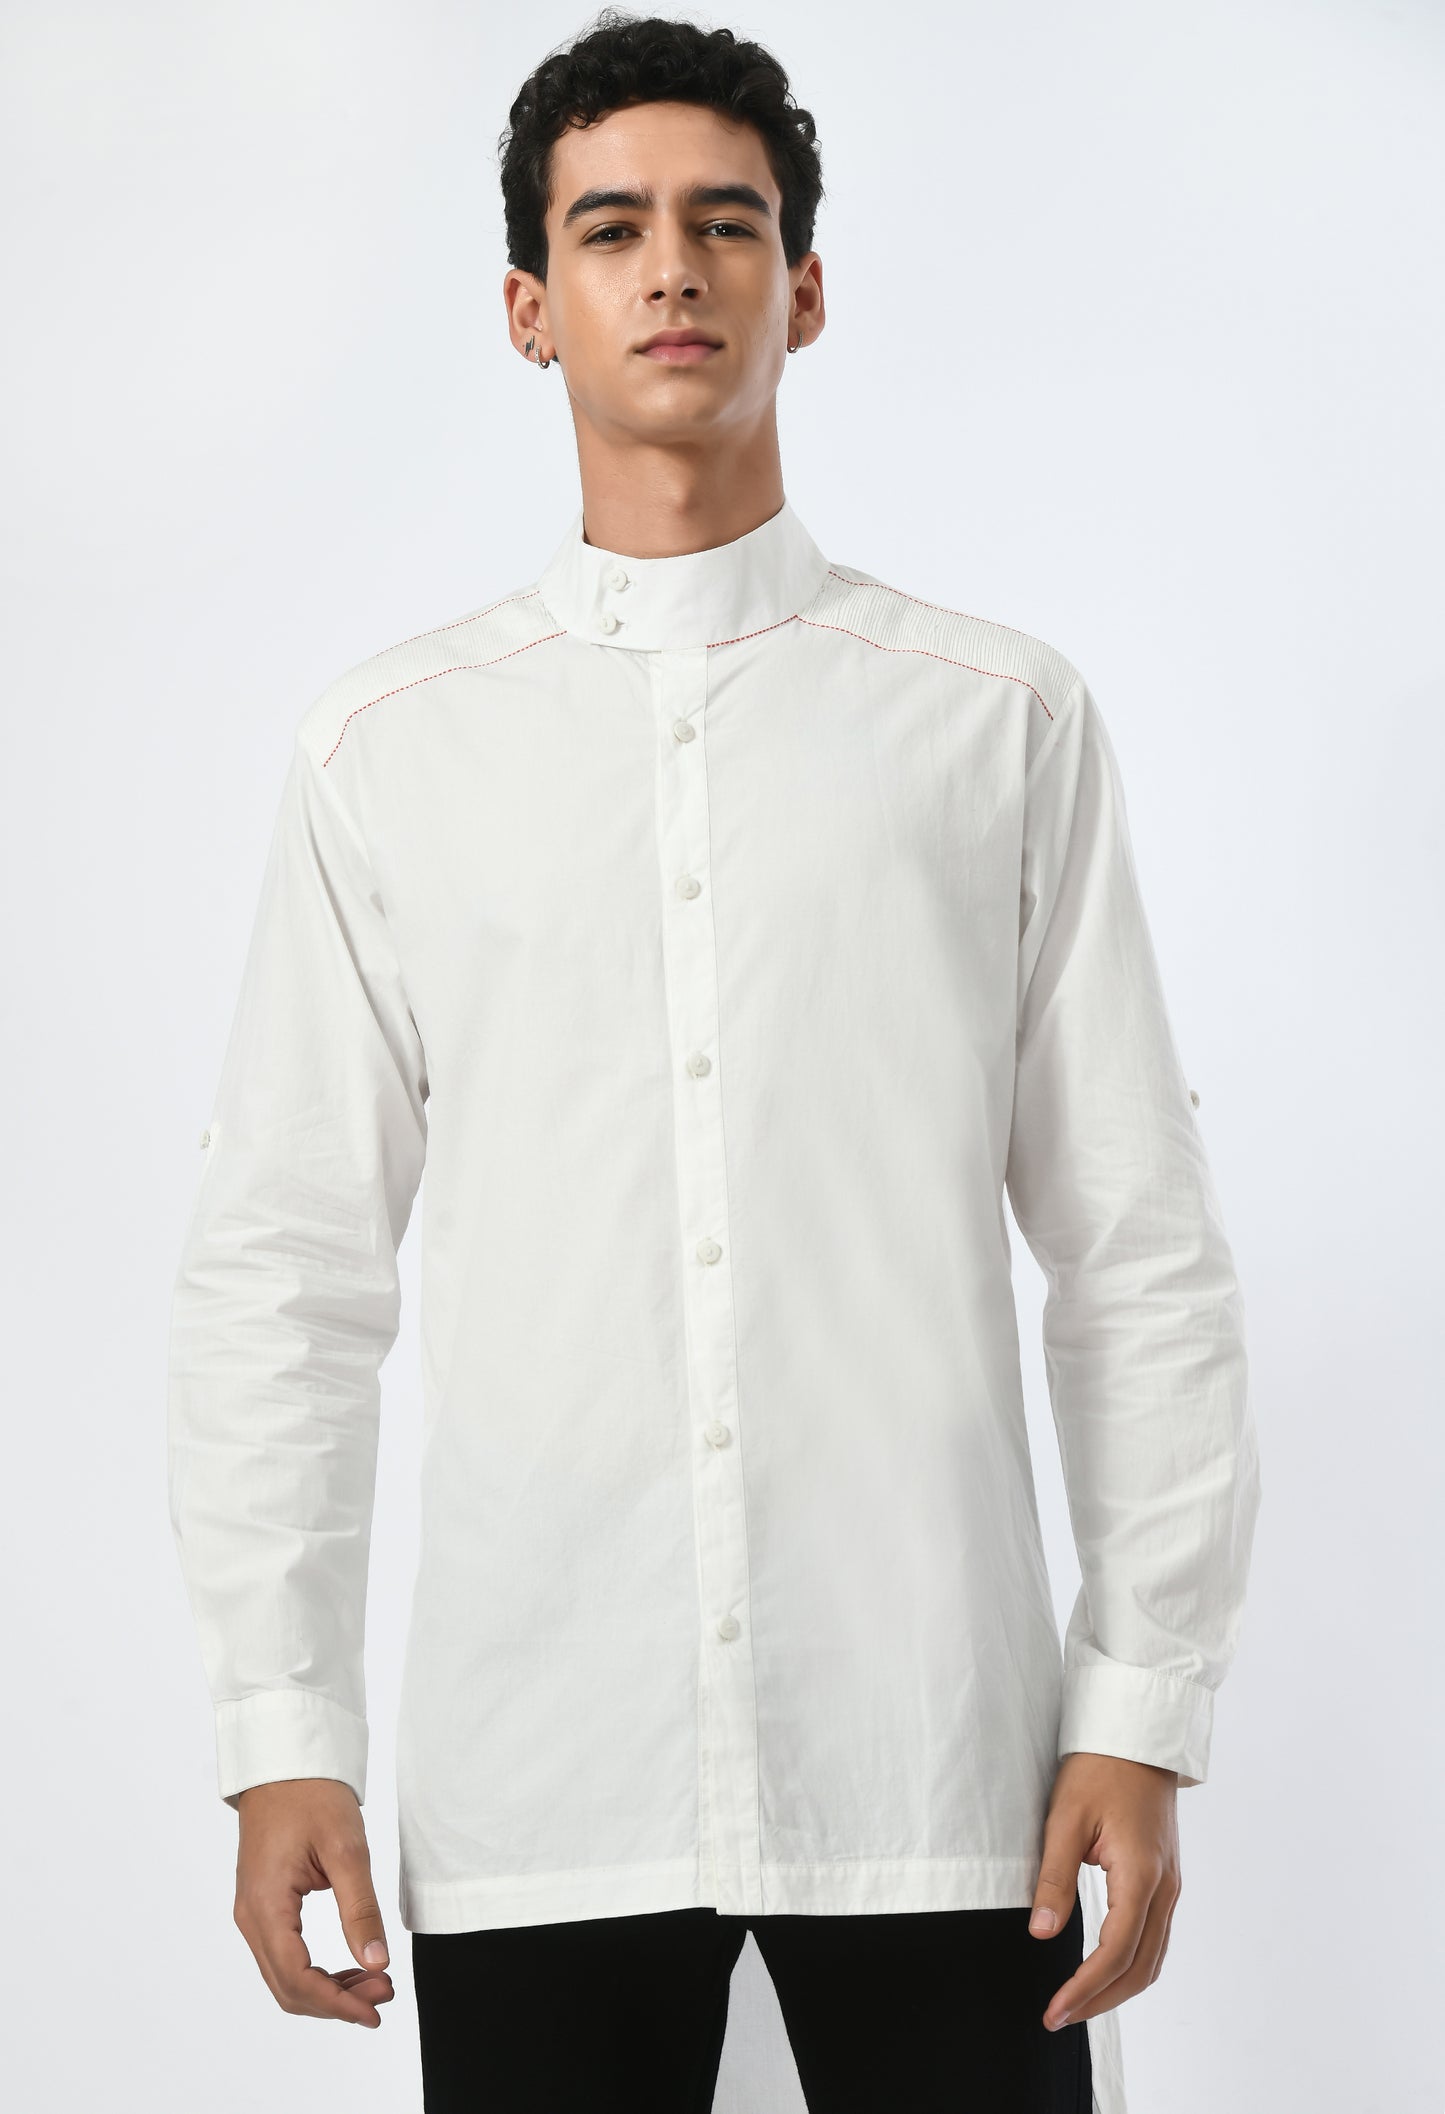 White unisex shirt with a Mandarin collar.